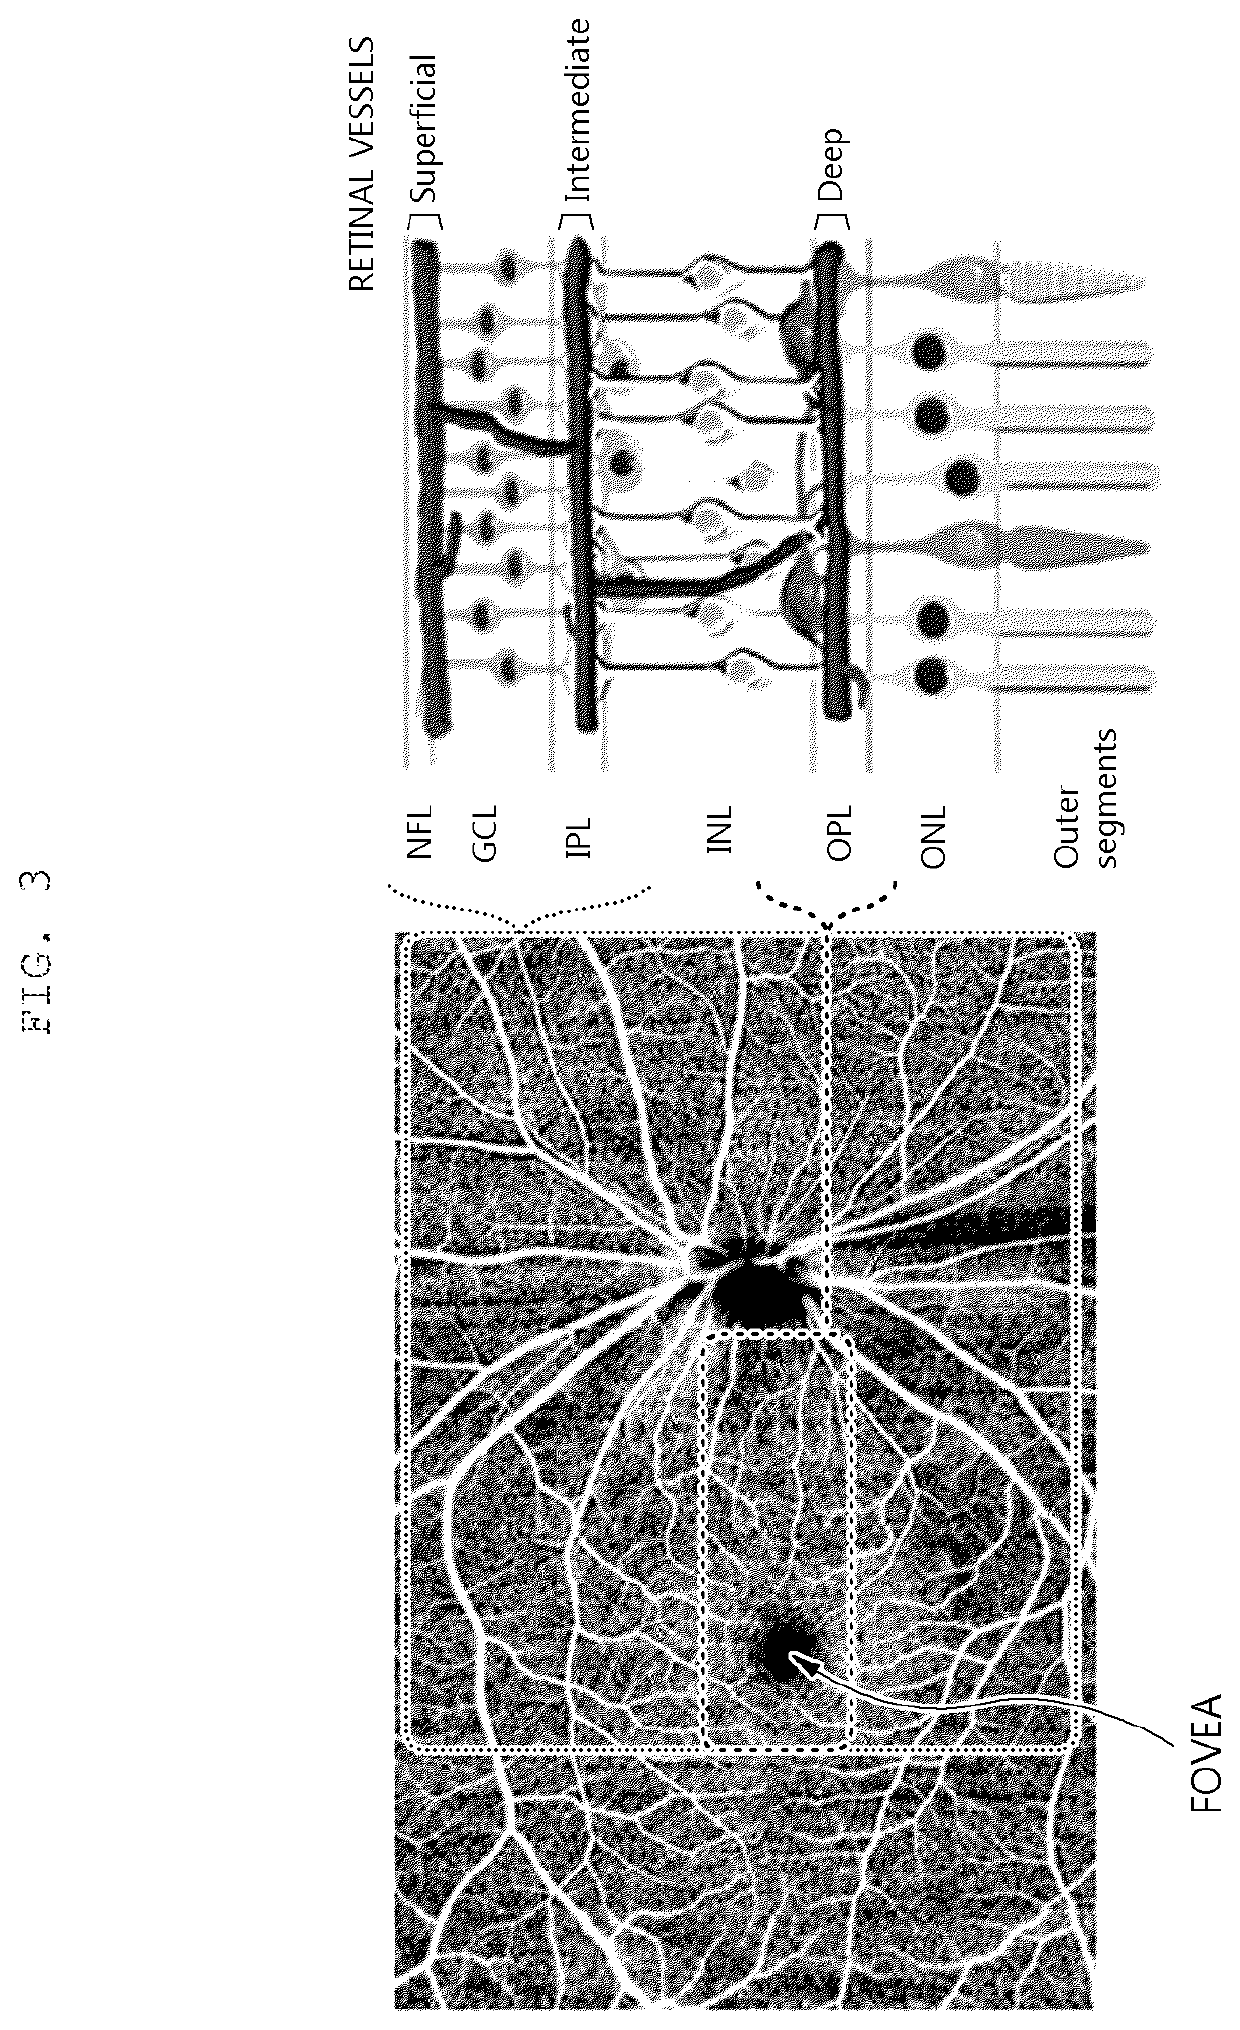 Eye Phantom for Evaluating Retinal Angiography Image